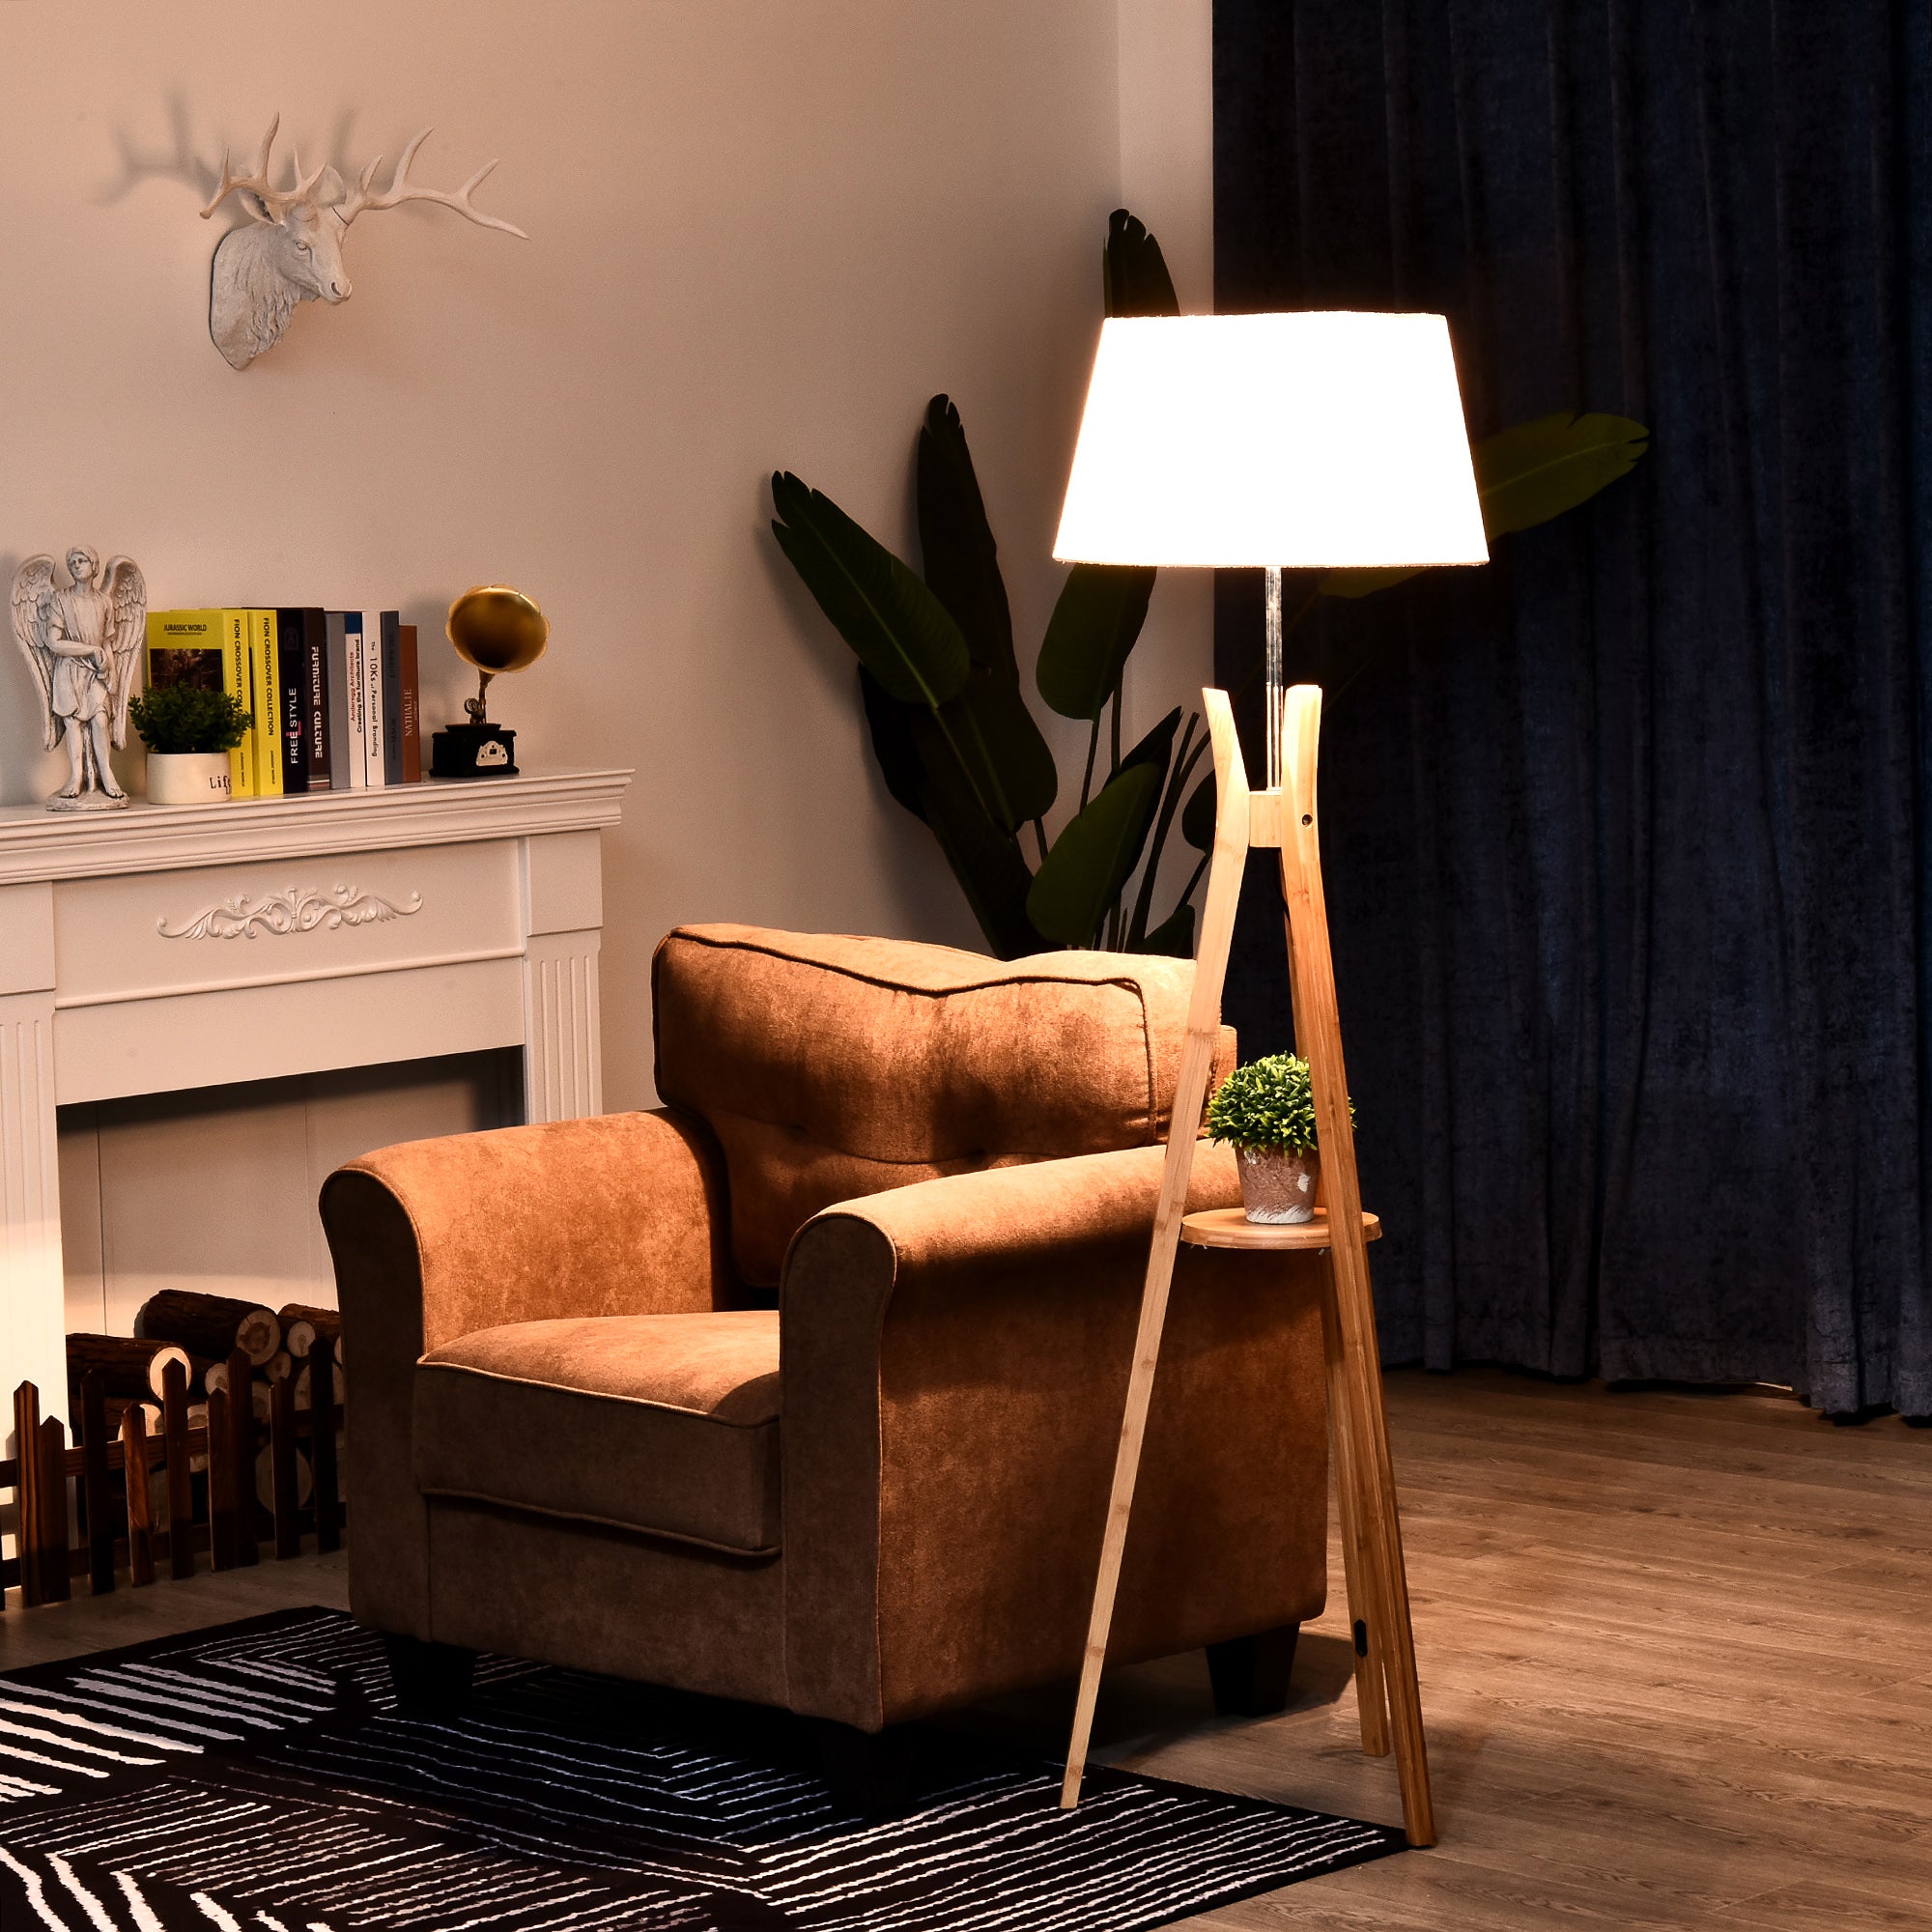 Tripod Floor Lamp Light E27 Base Bedroom Living Room Natural Wooden Fabric Shade Storage Shelf Foot Switch, 156cm, White  AOSOM   